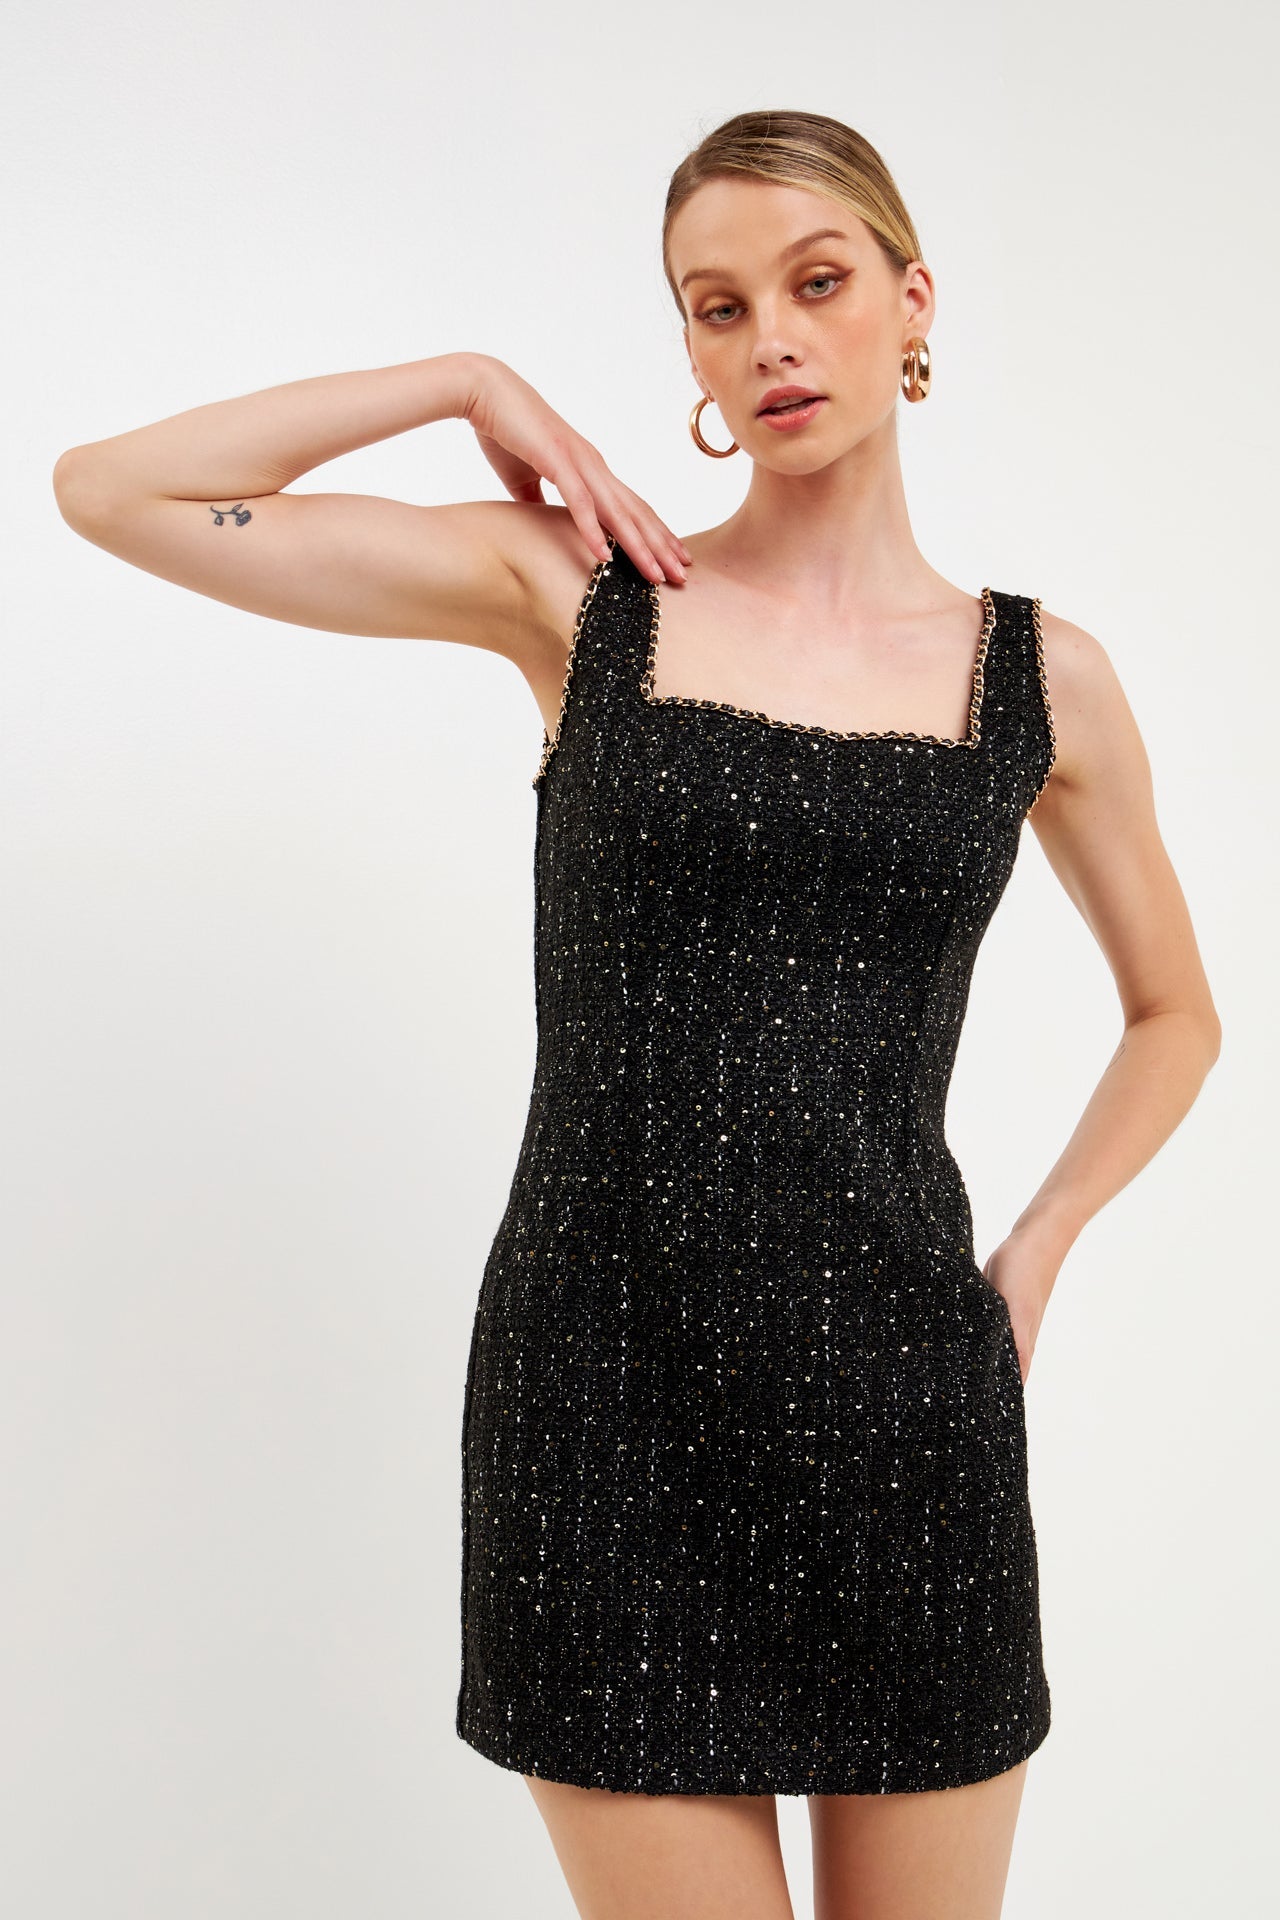 Canal Tweed Mini Dress S BLACK herlipto - ファッション